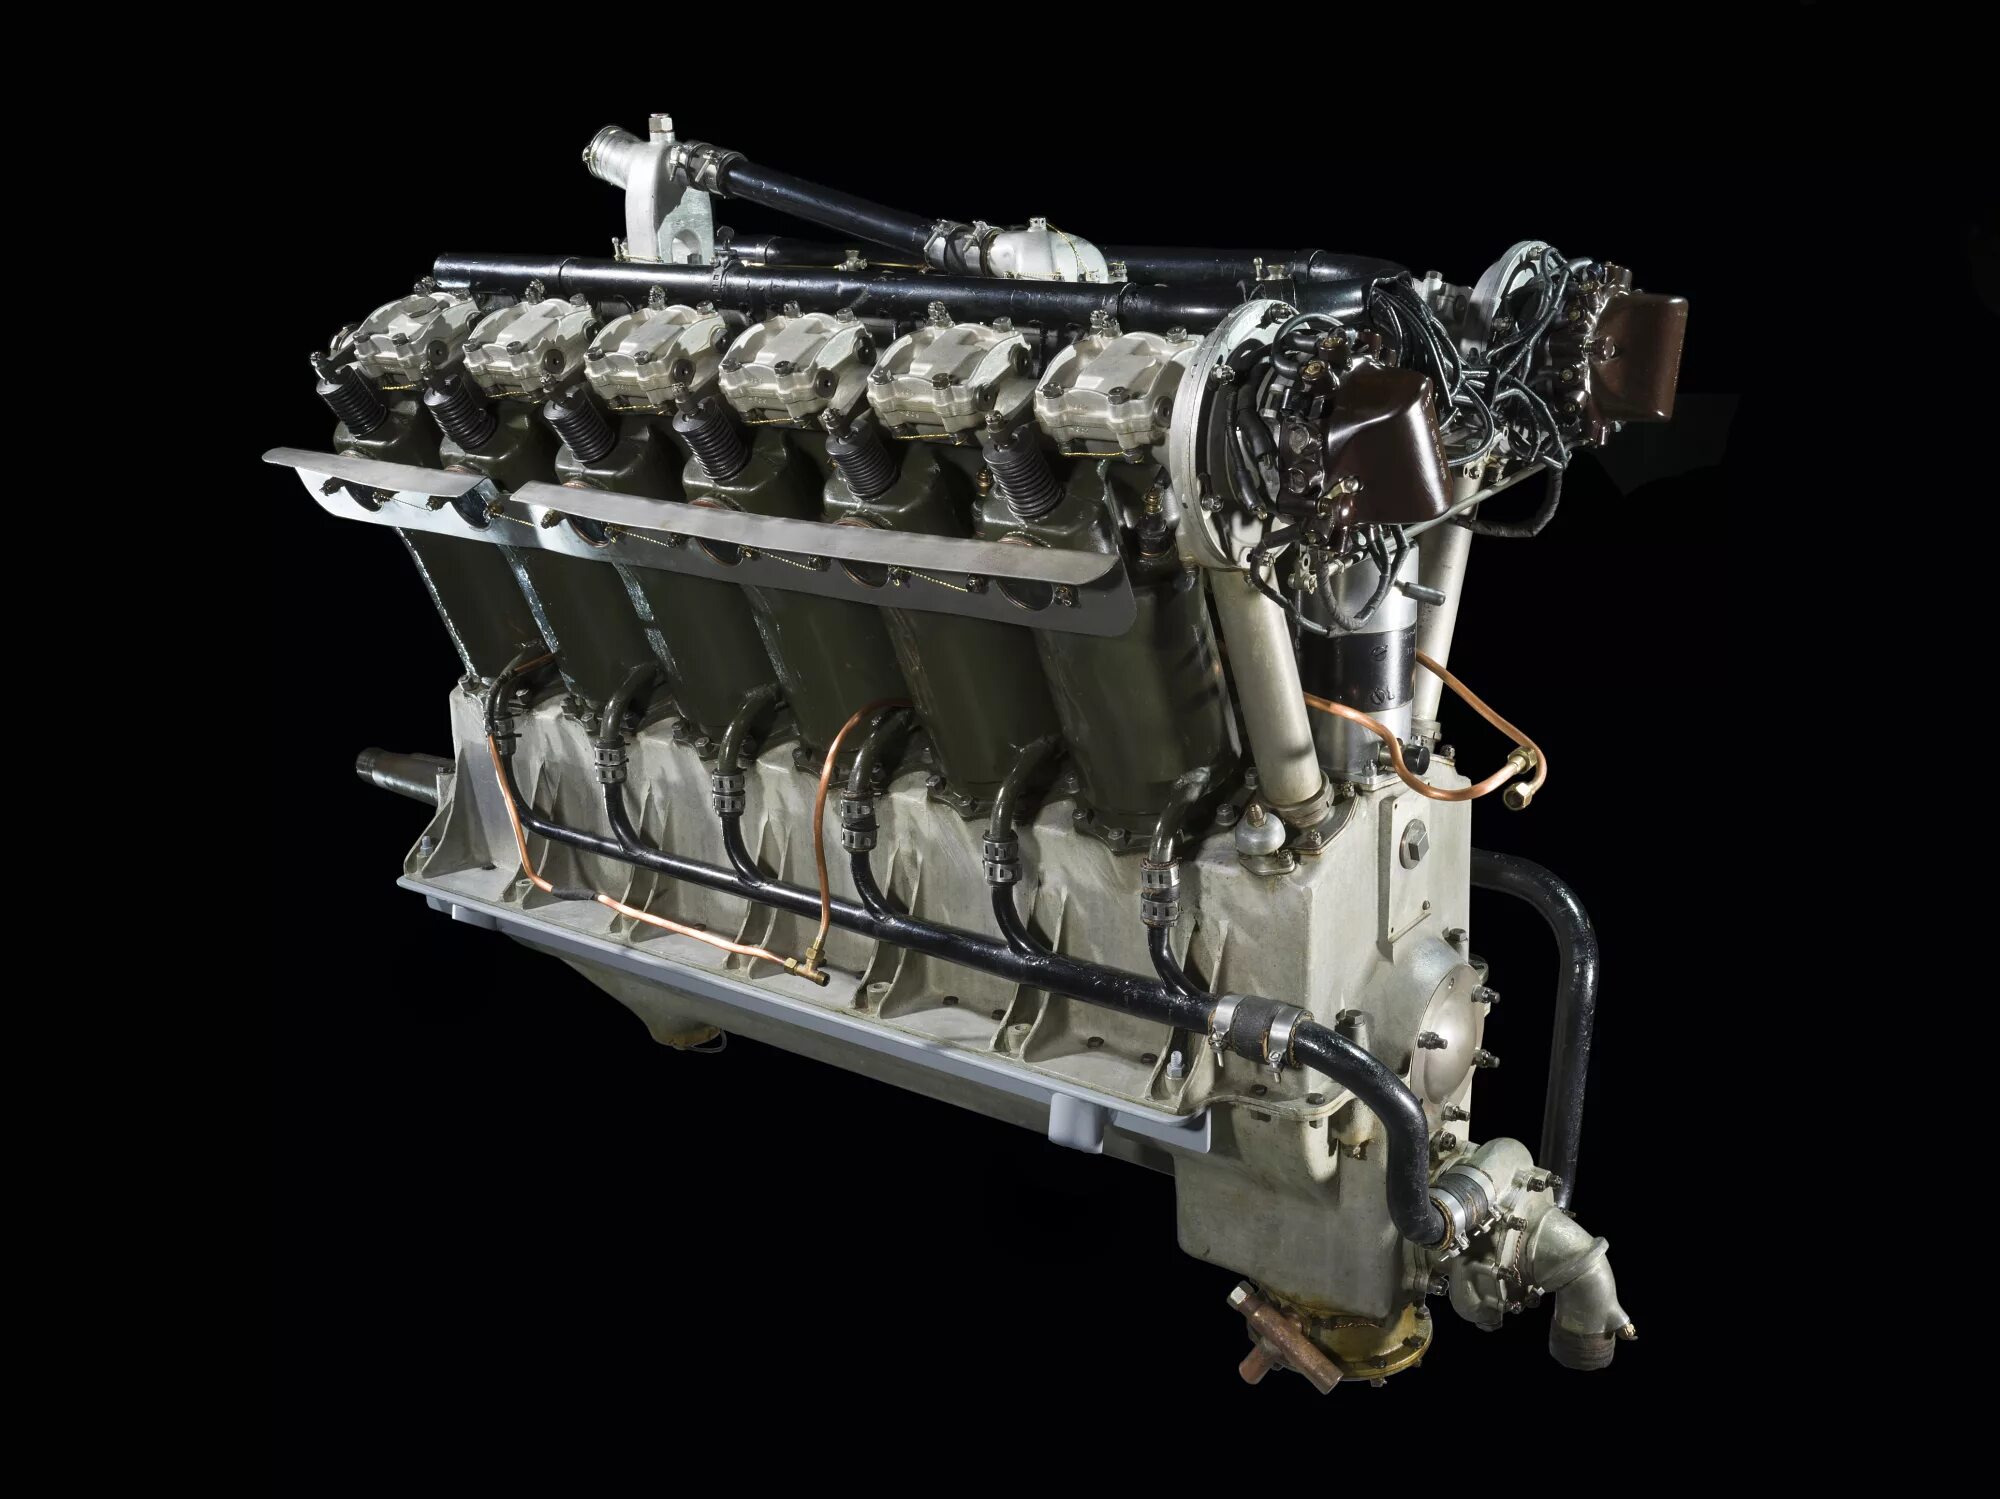 12 двиг. V12 двигатель. Lincoln v12 engine. BMW v12 engine. GMC 702 v12 engine.